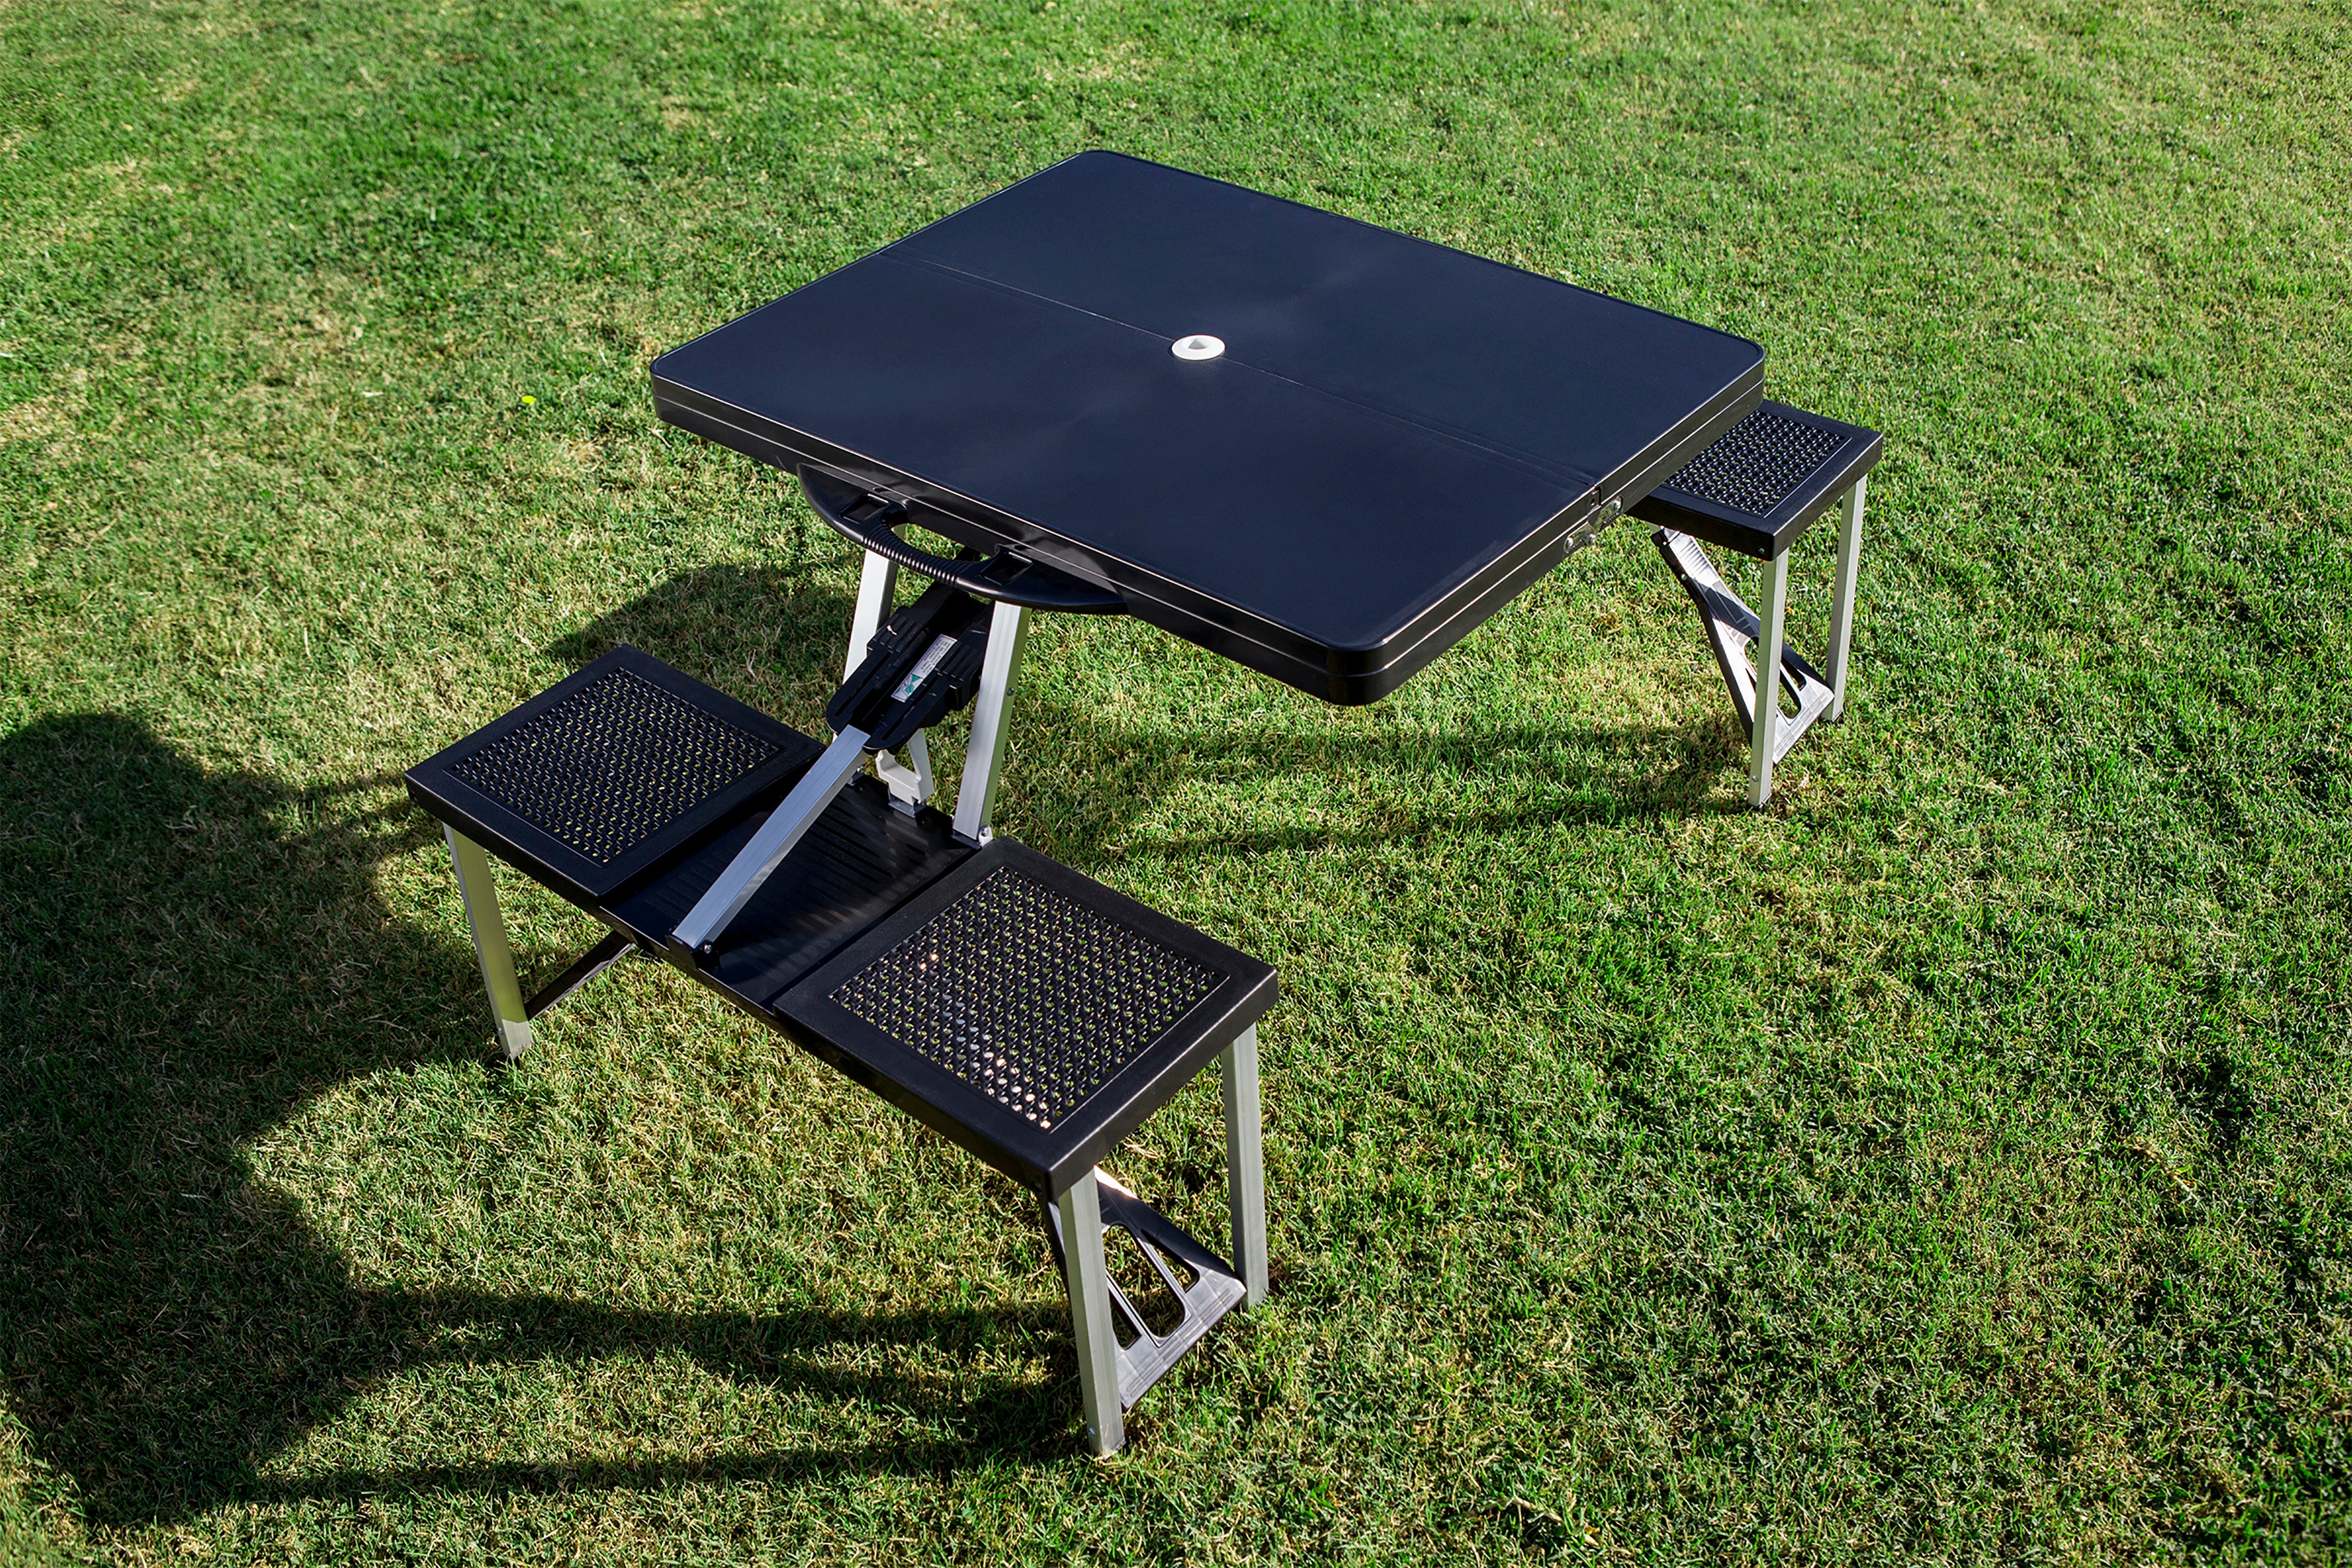 Washington Huskies Football Field - Picnic Table Portable Folding Table with Seats